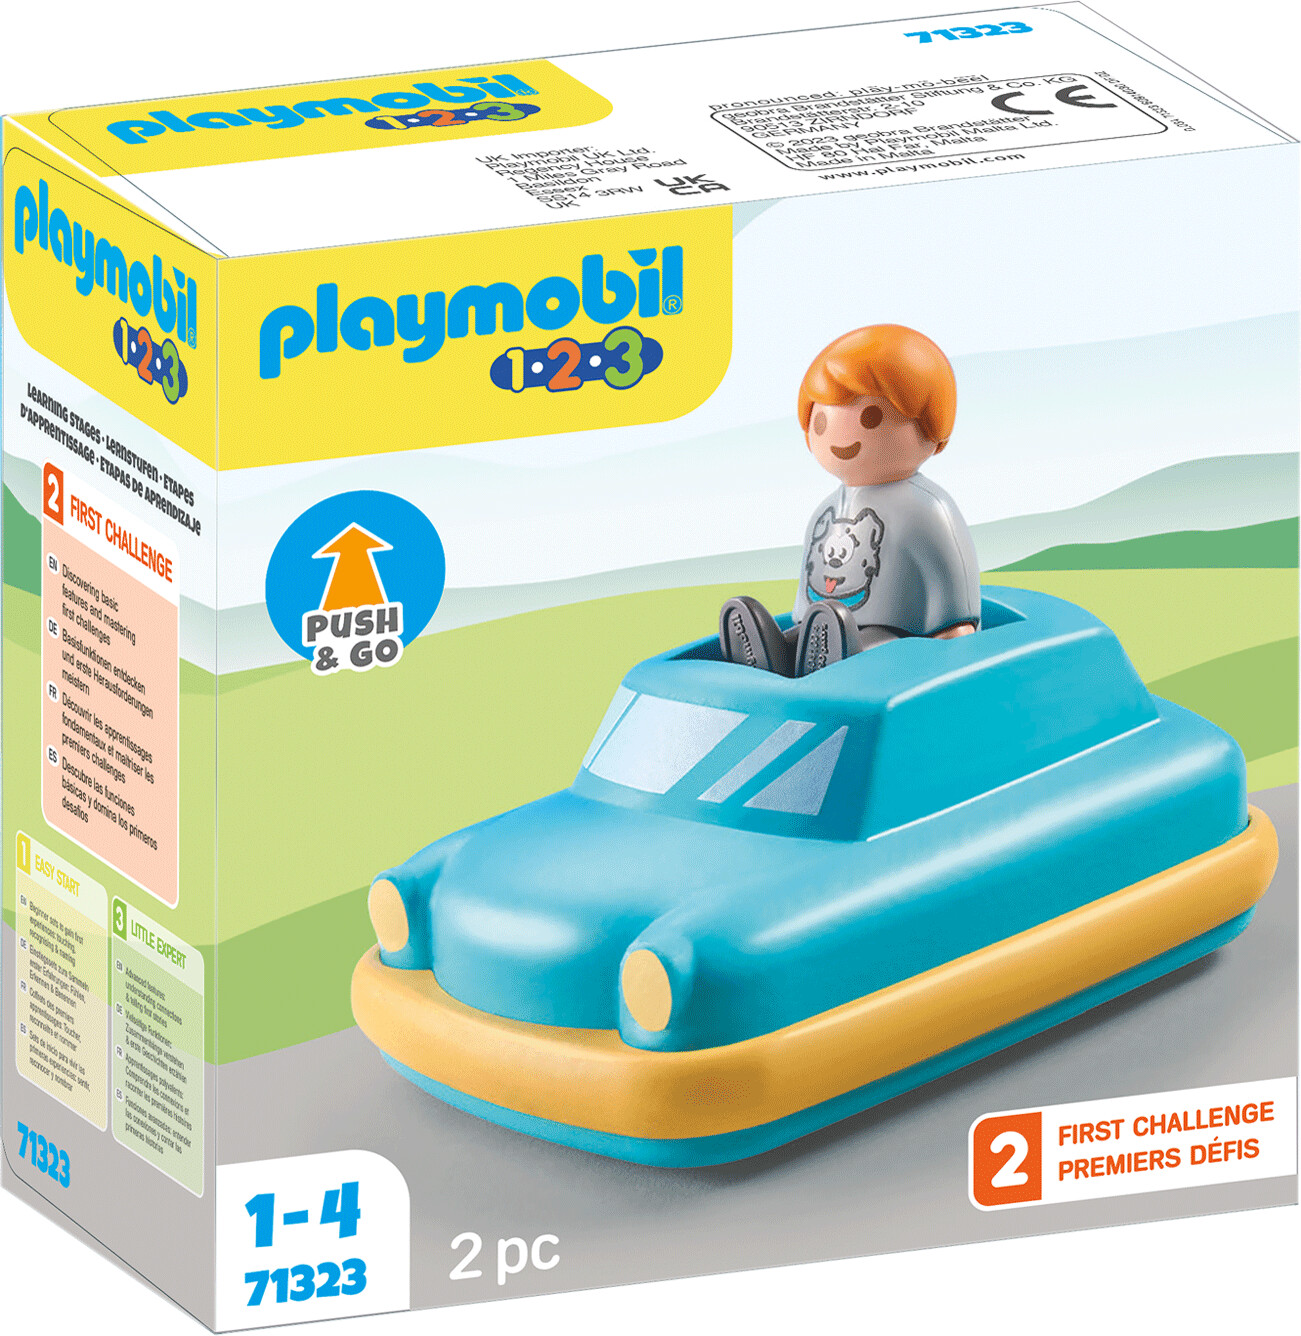 Playmobil® 1.2.3 - Héros du quotidien - 71156 - Playmobil® 1.2.3